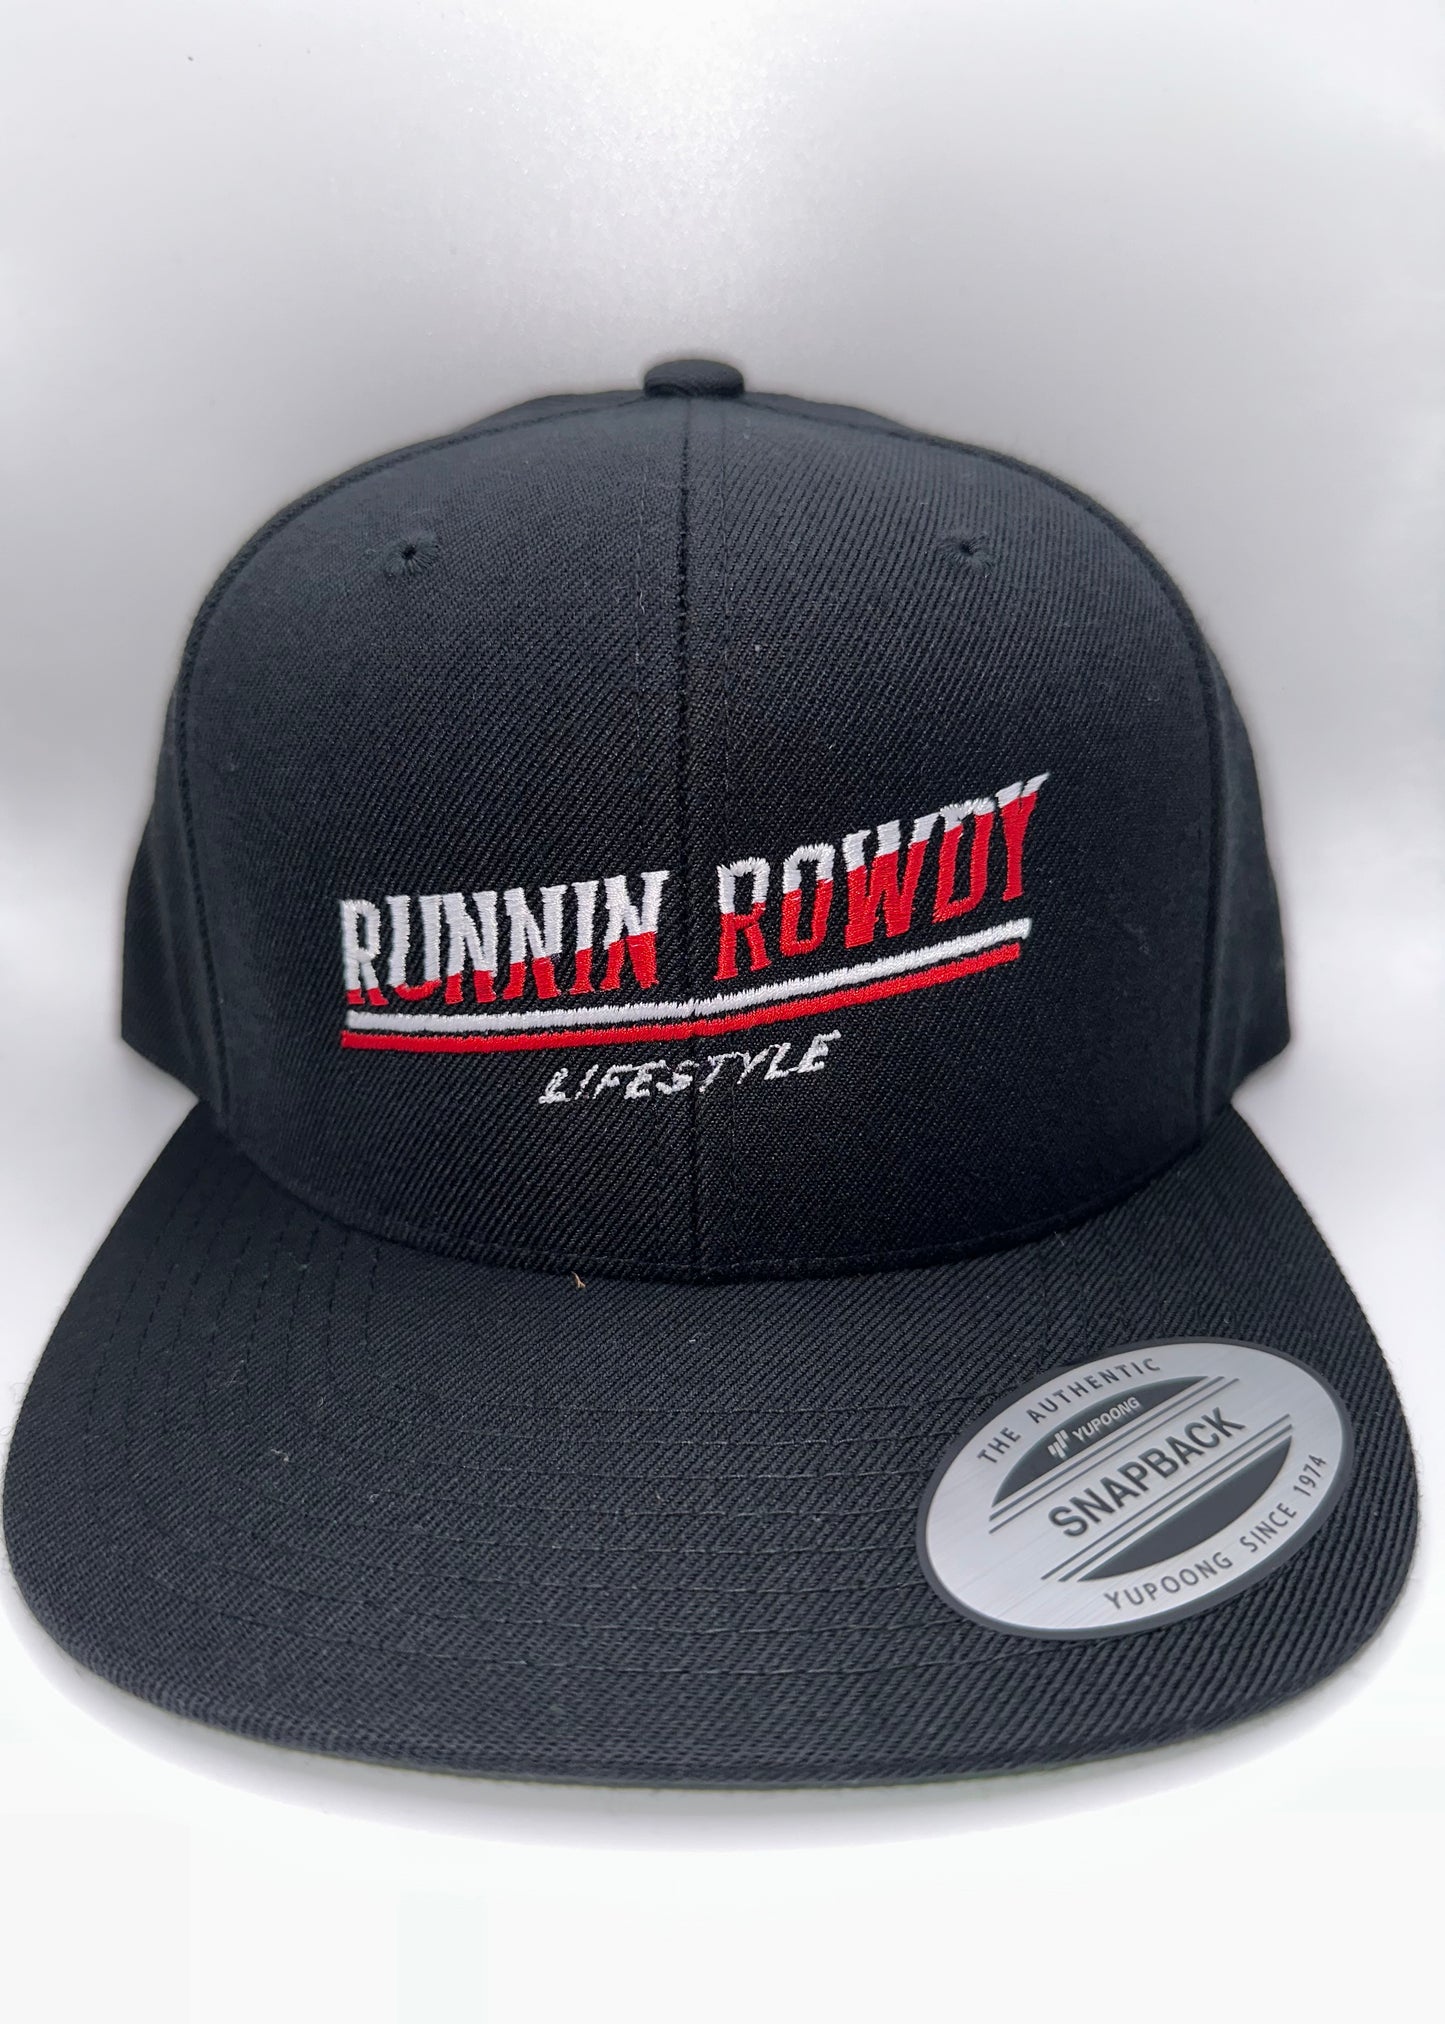 Runnin Rowdy Lifestyle Hat dark gray